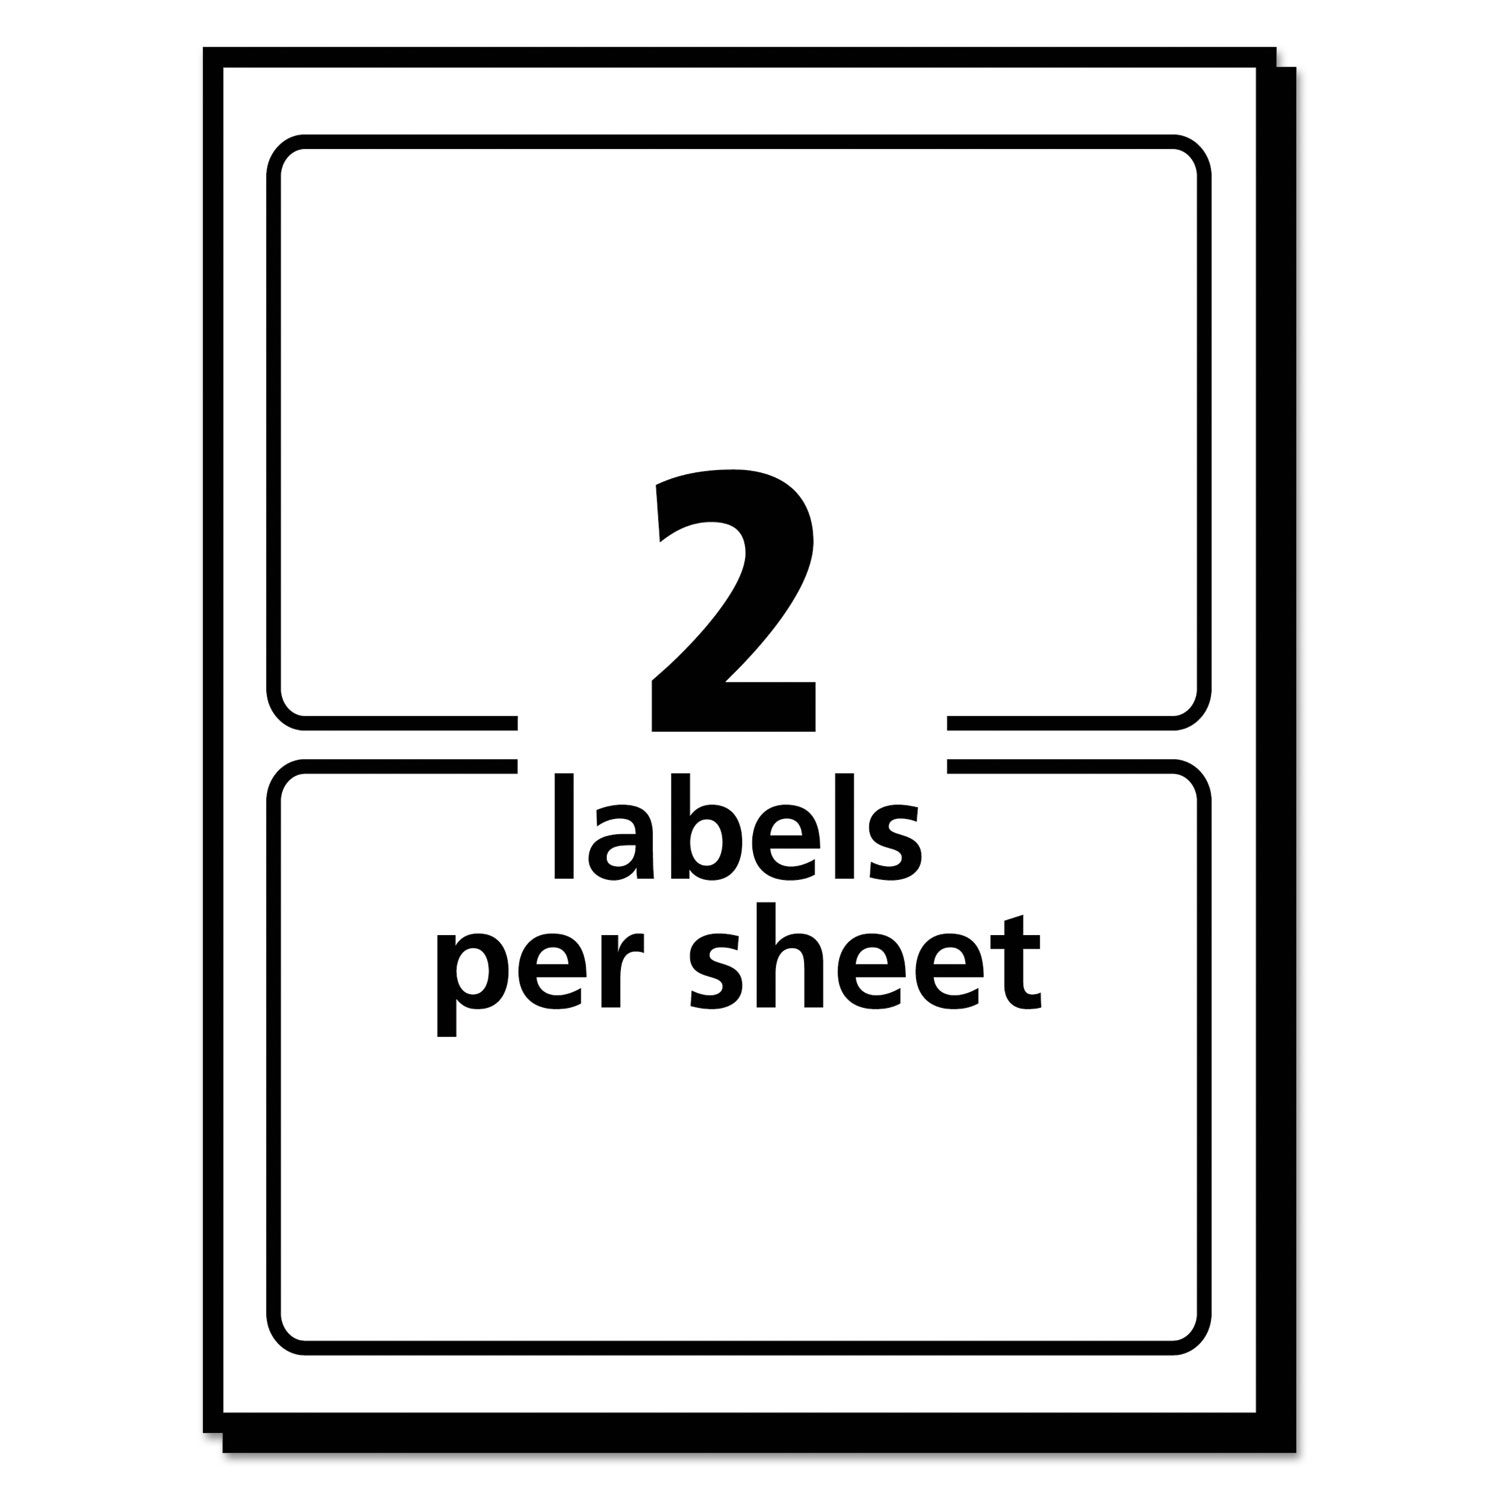 Printable Adhesive Name Badges 3 38 x 2 33 White 100/Pack